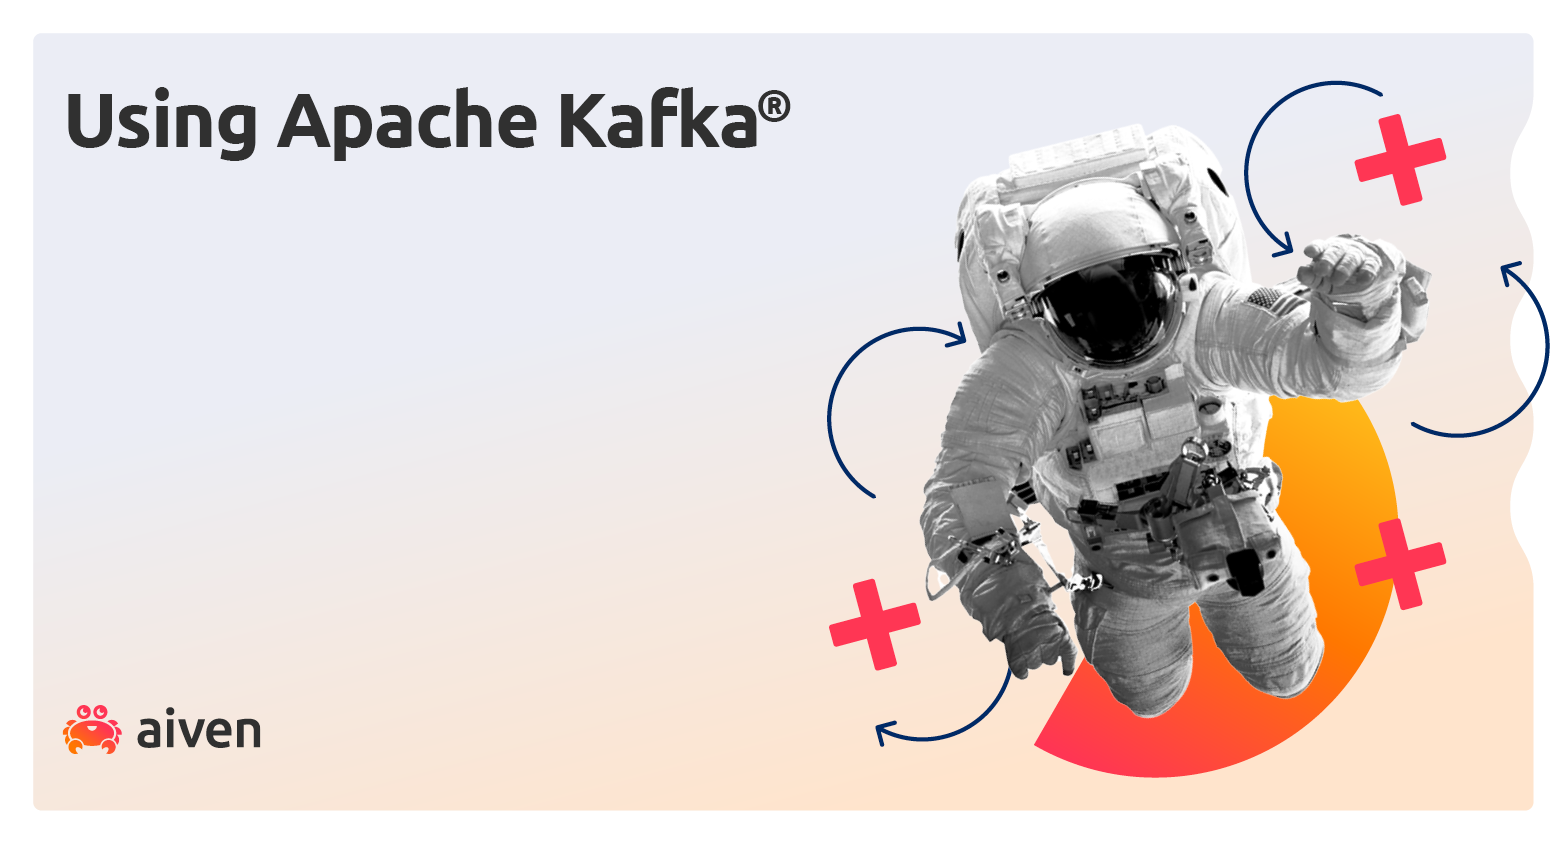 Use cases for Apache Kafka illustration